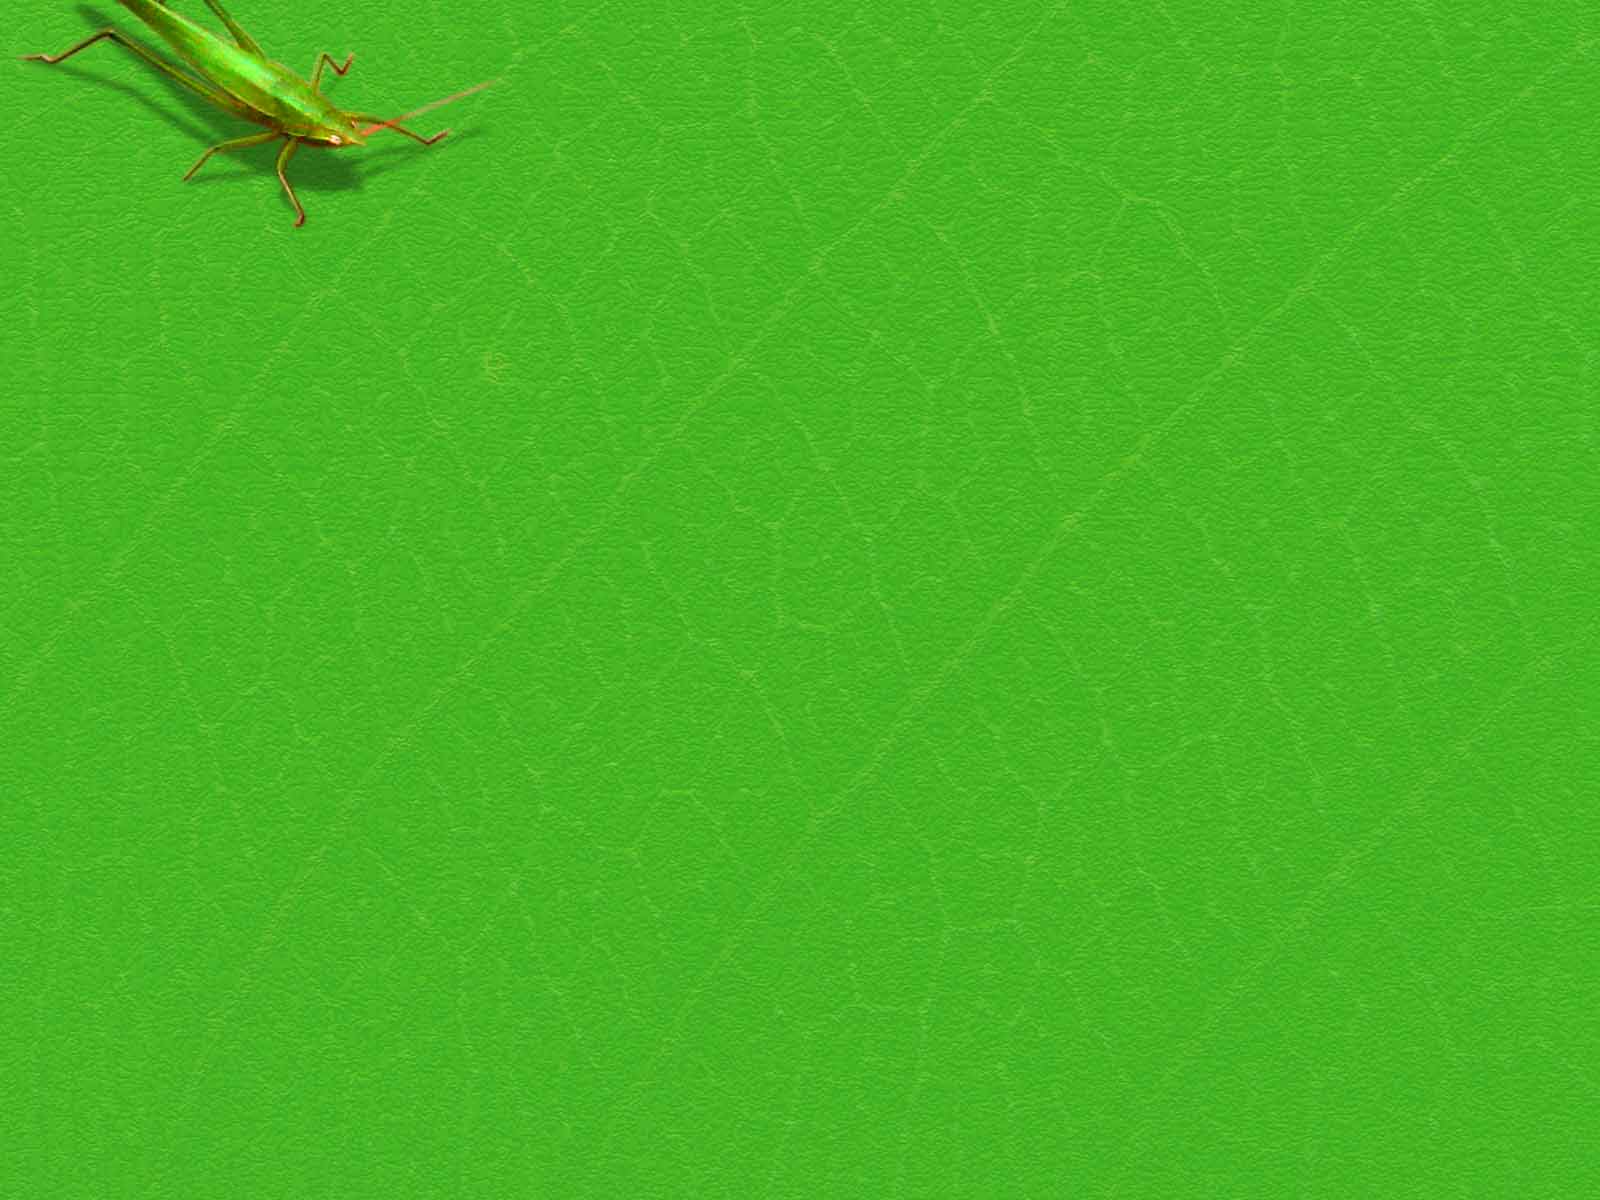 Grasshoper PPT Backgrounds